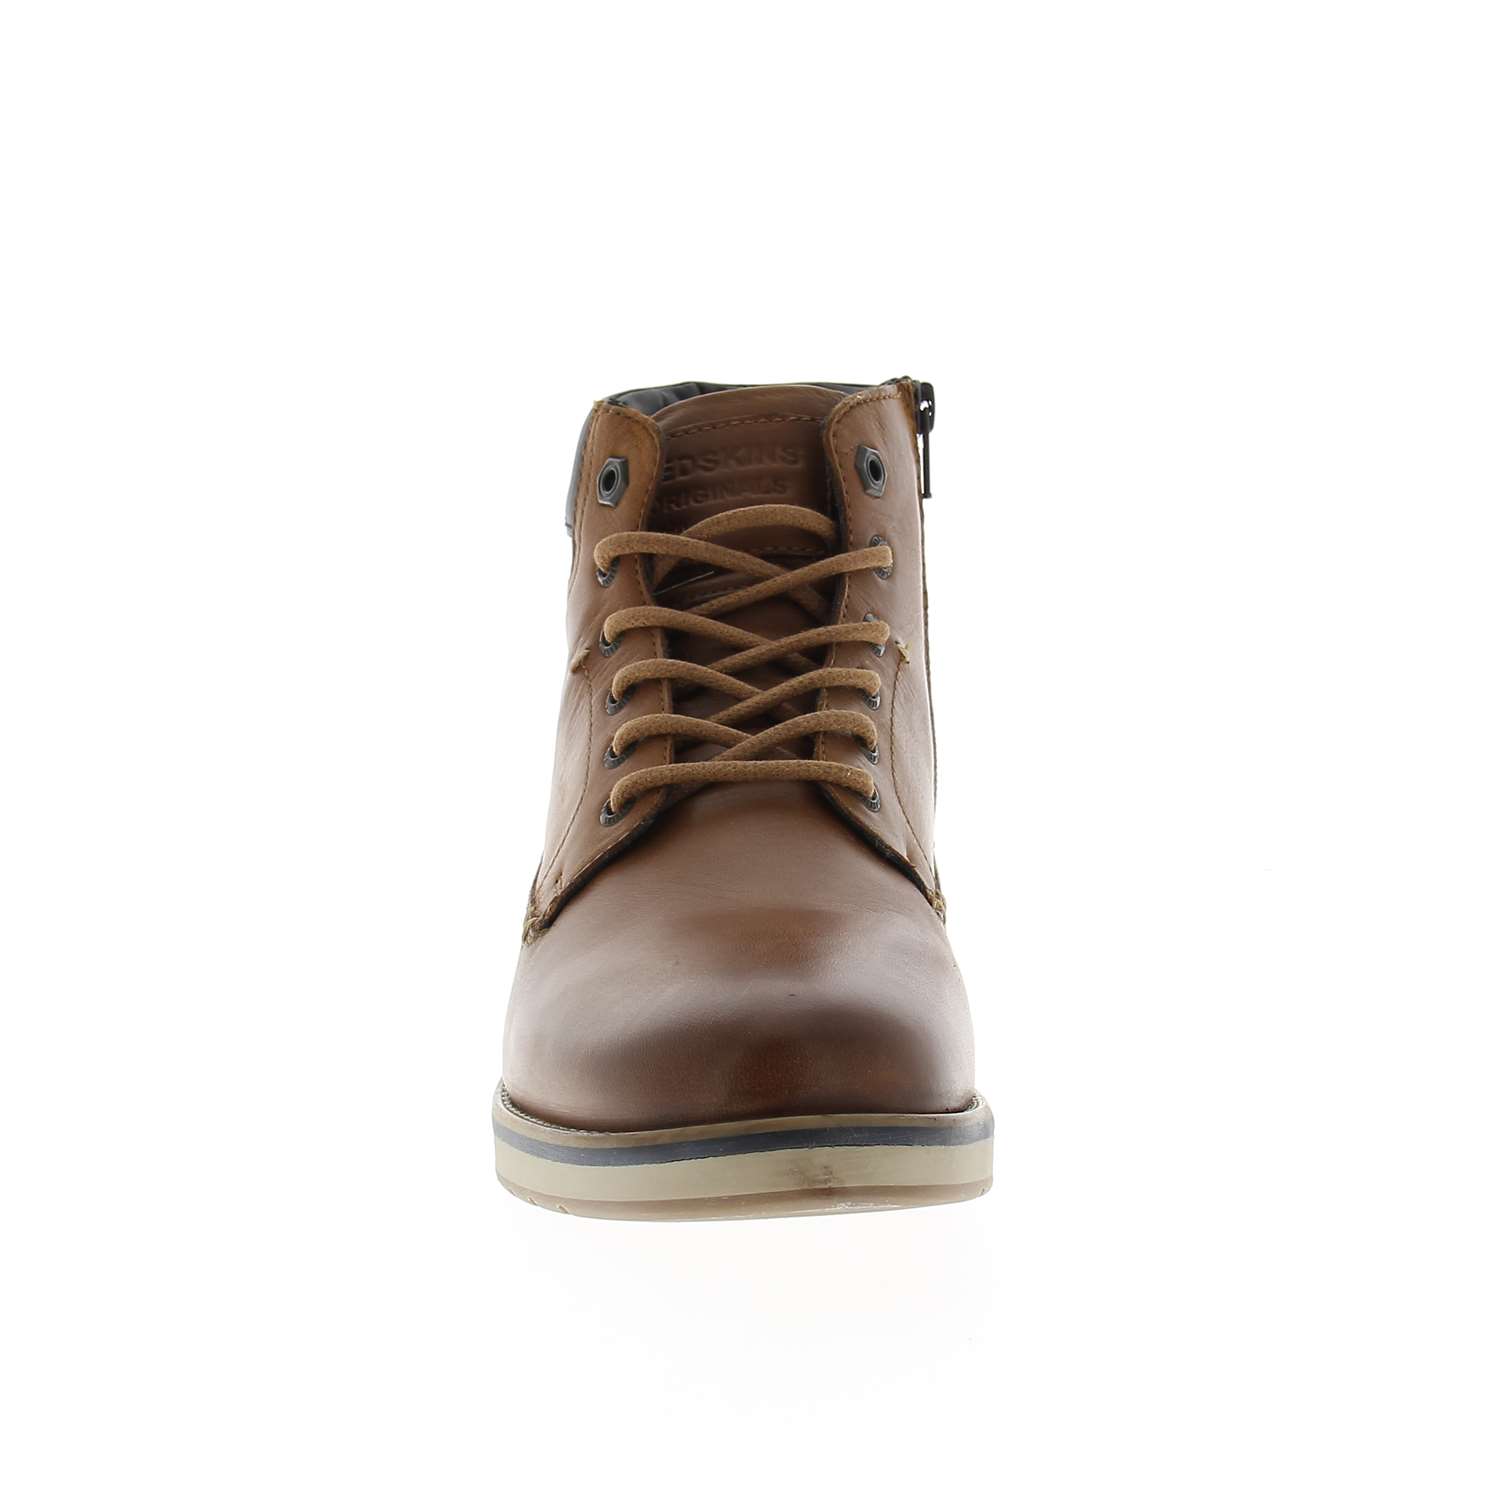 03 - ACCRI - CLEON - Boots et bottines - Cuir